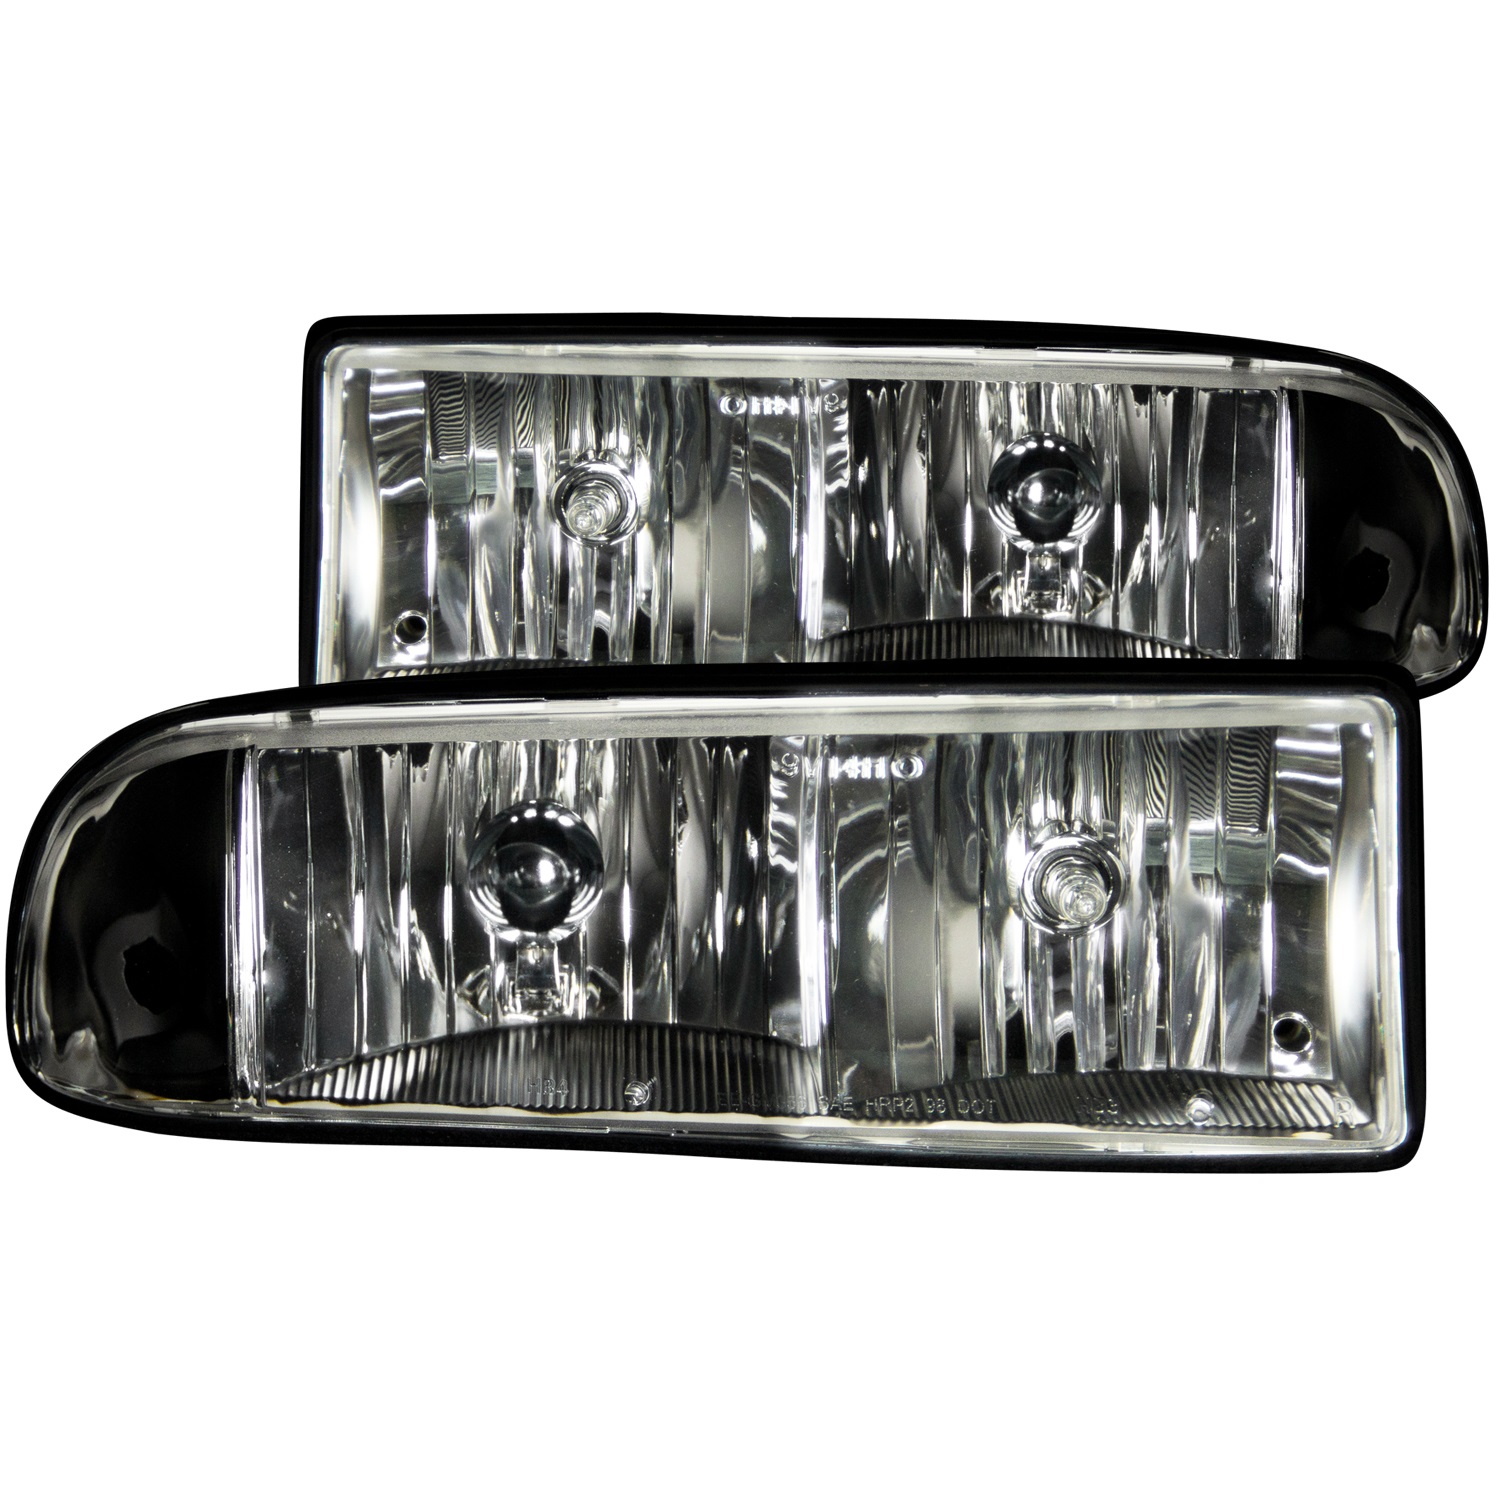 Anzo USA 111156 Crystal Headlight Set Fits 98-04 S10 Blazer S10 Pickup